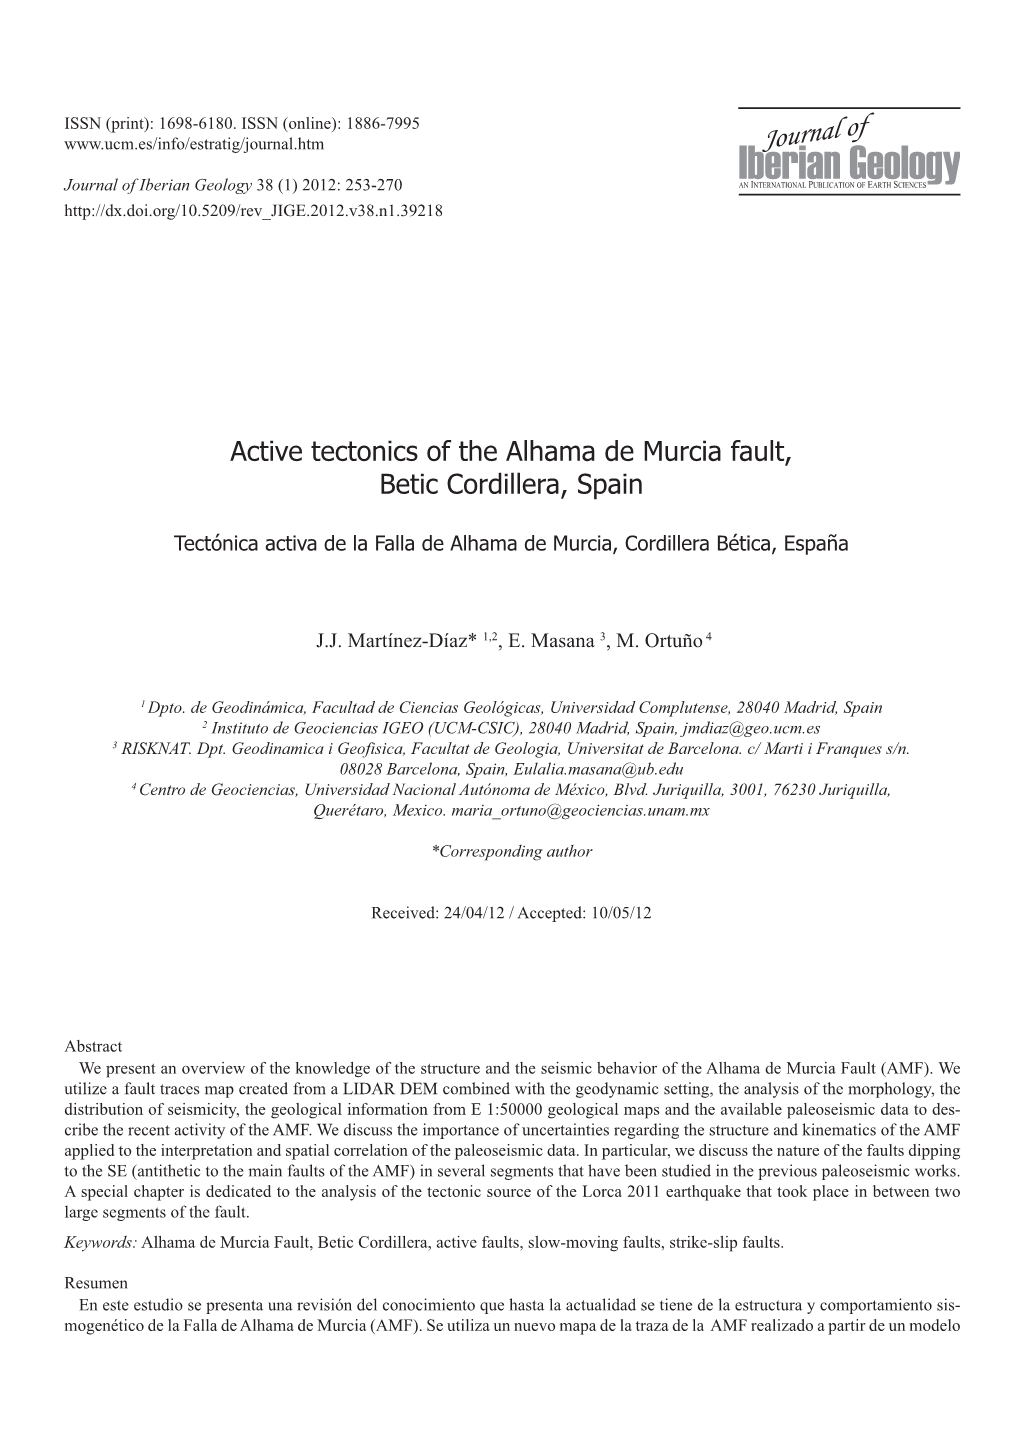 Active Tectonics of the Alhama De Murcia Fault, Betic Cordillera, Spain